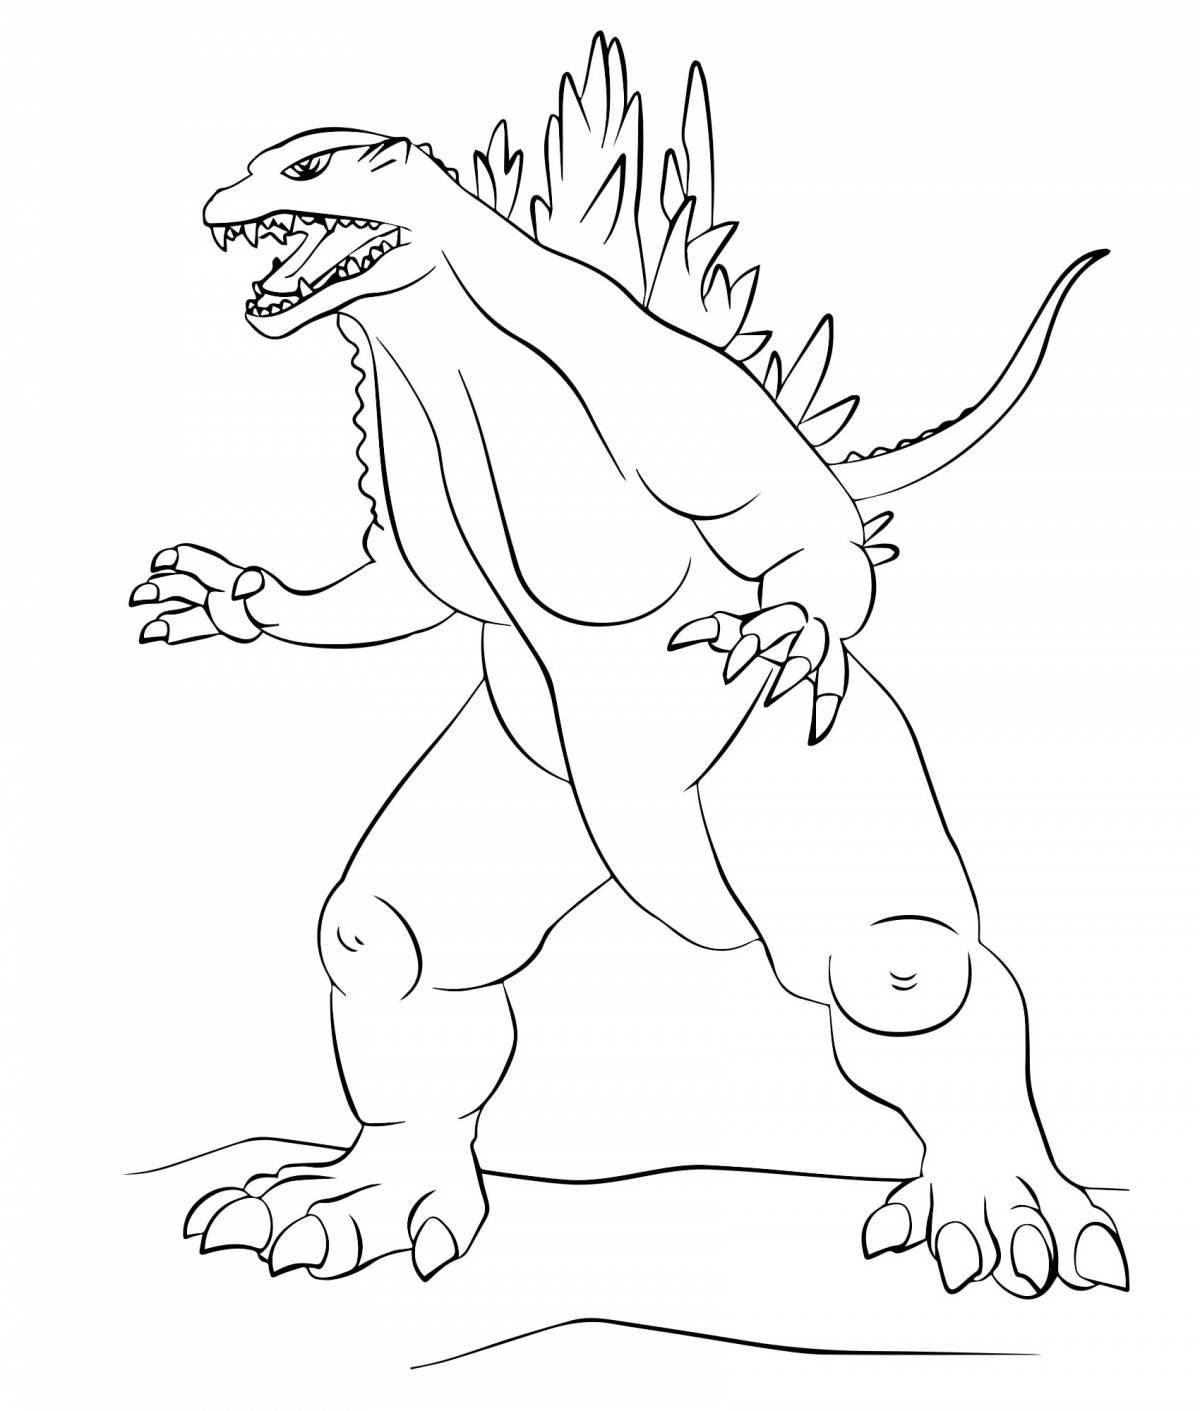 Rampant Godzilla coloring book for kids